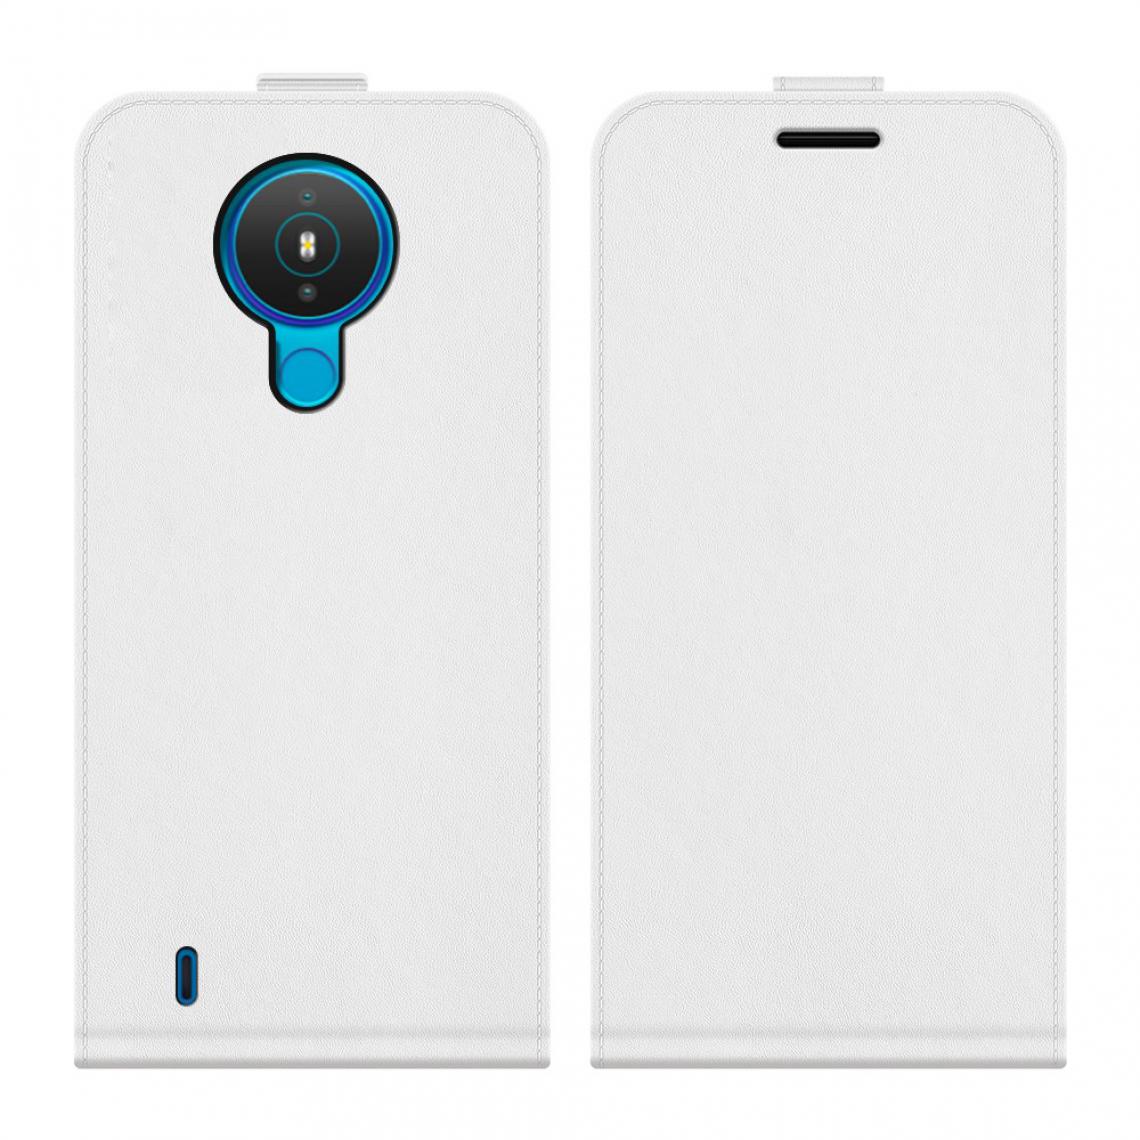 Other - Coque en TPU + PU Flip vertical Crazy Horse avec porte-carte blanc pour votre Nokia 1.4 - Coque, étui smartphone